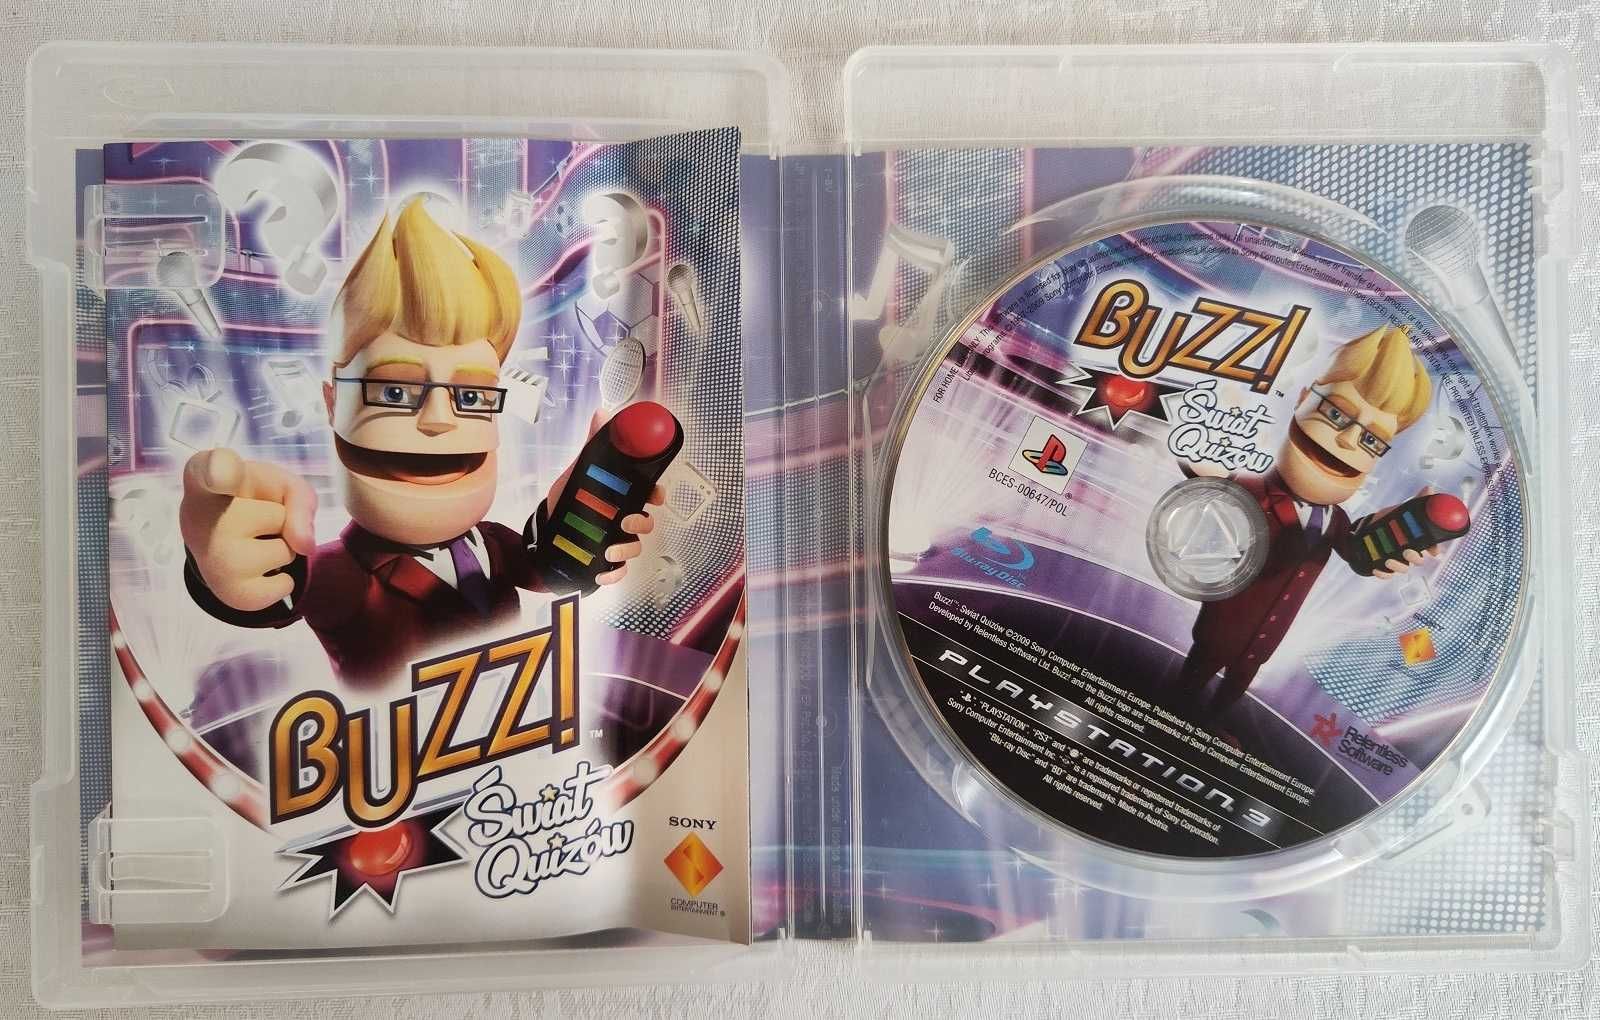 Buzz Świat Quizów PL PS3 PlayStation 3